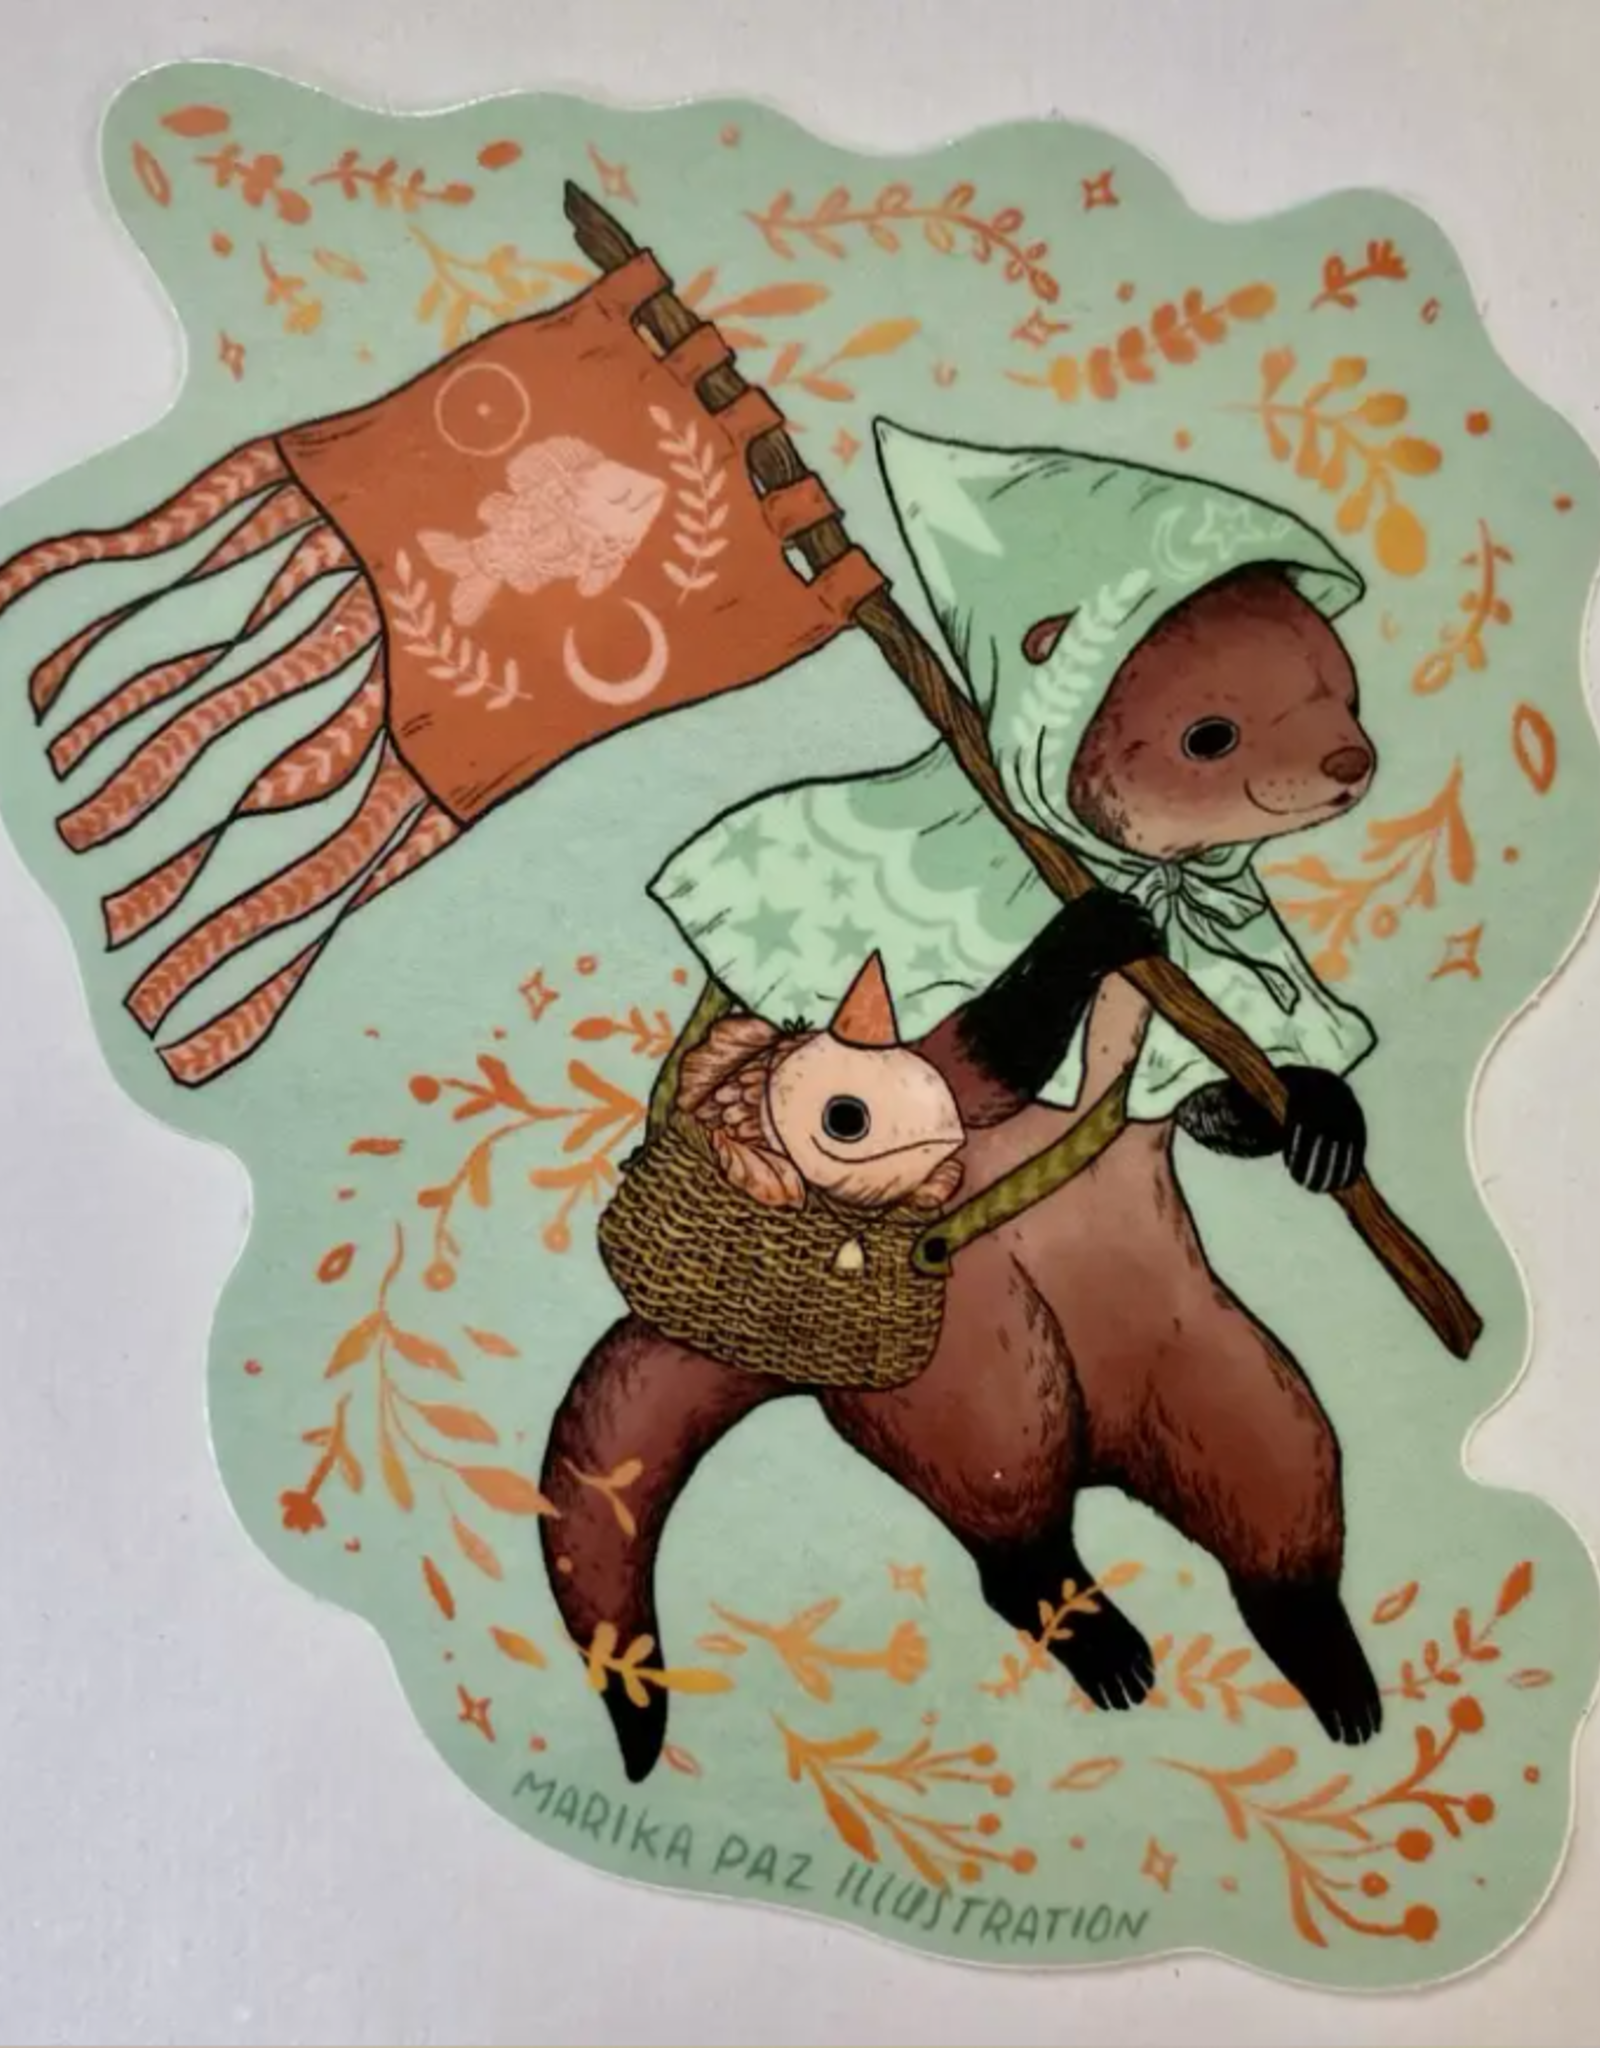 Marika Paz Illustration Otter and Fish Sticker